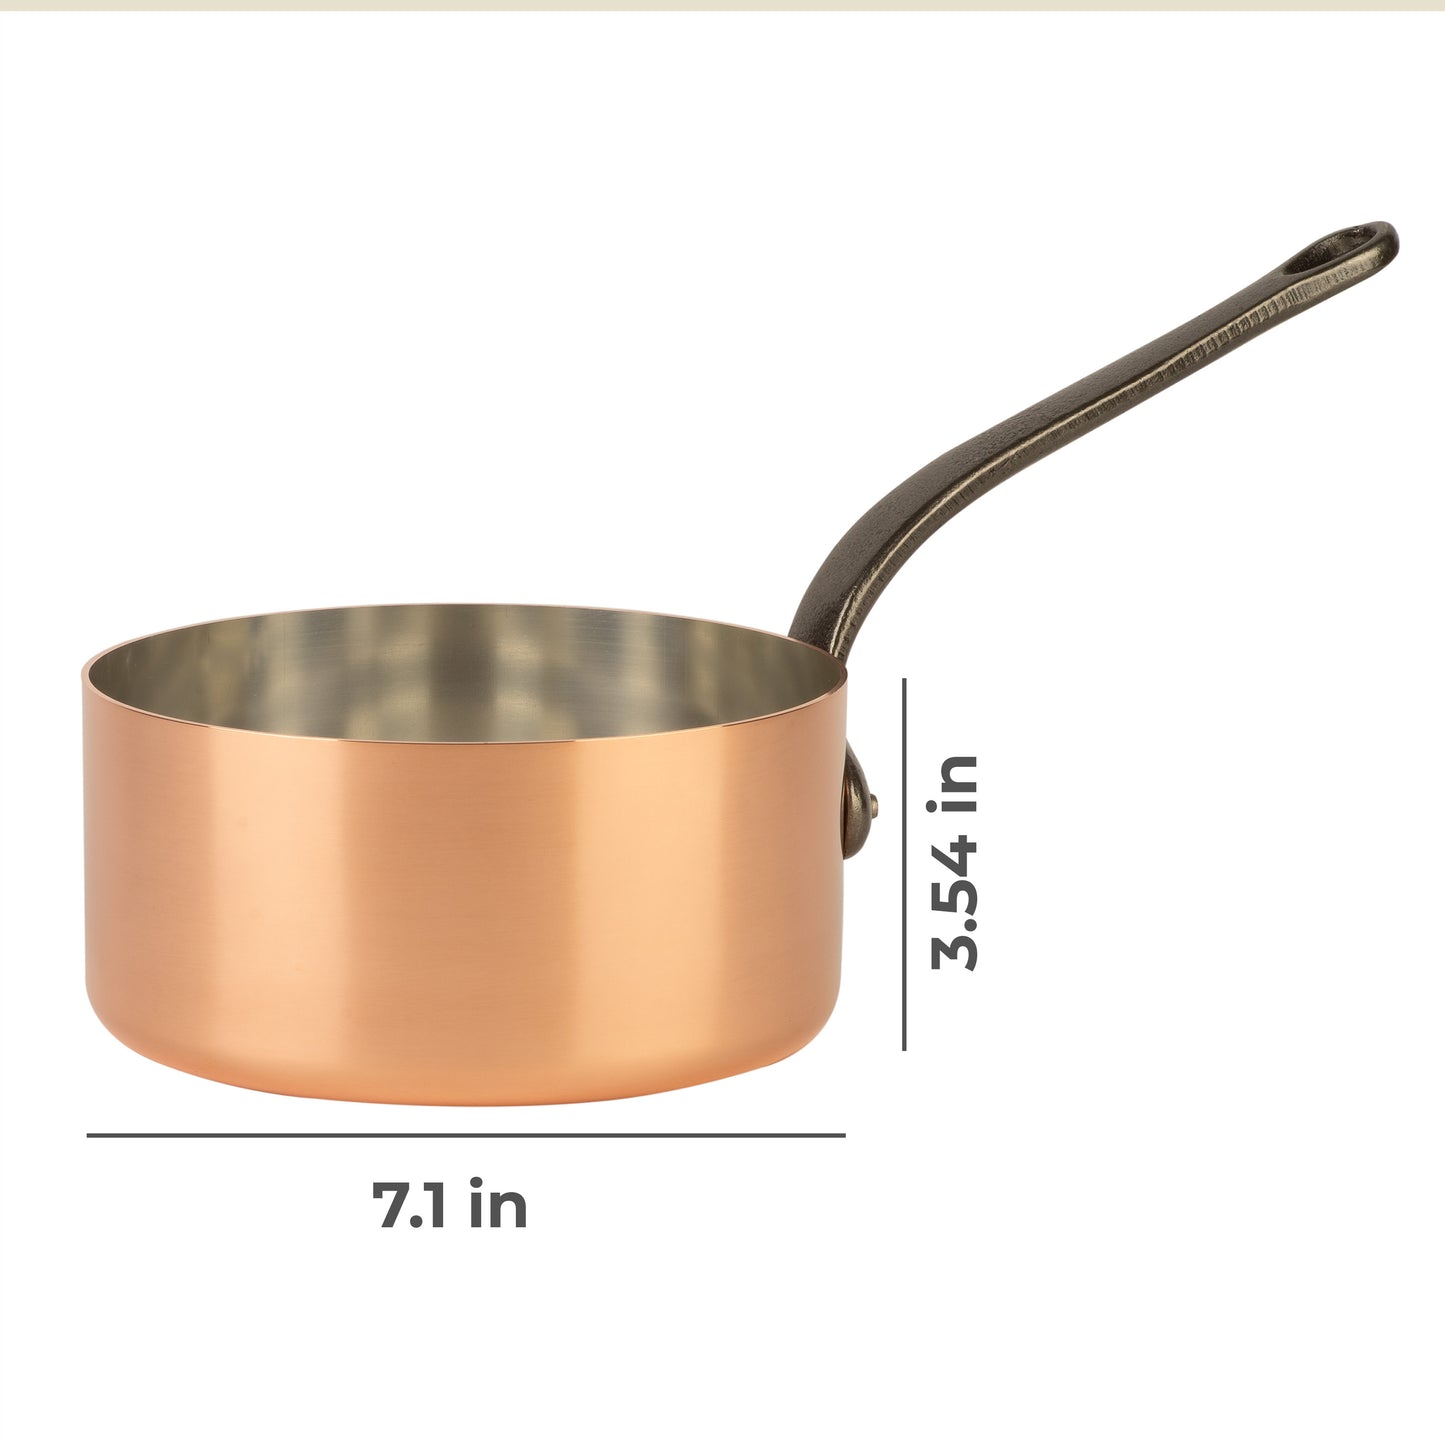 B-Ware 20% Tinned copper saucepan 2.2  qt